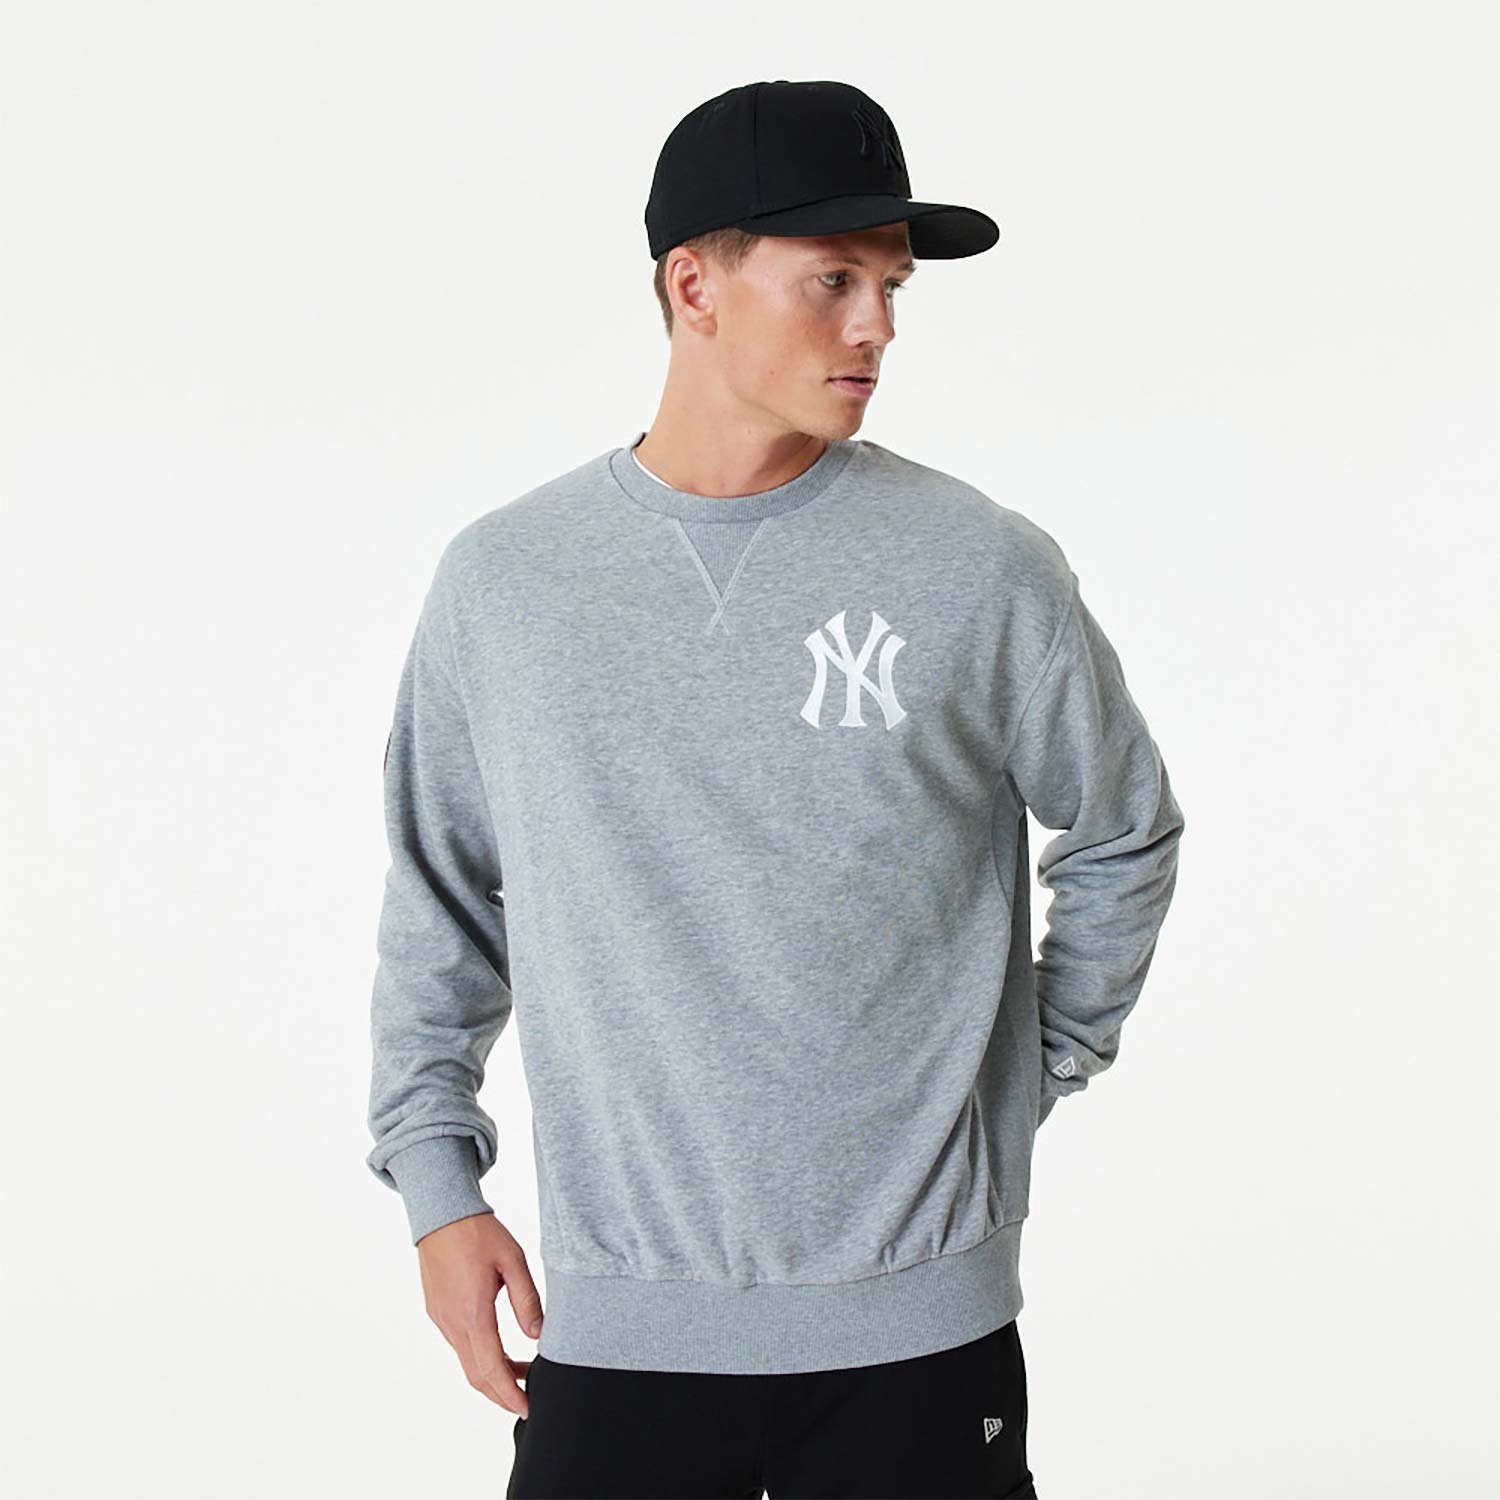 New York Yankees MLB Heritage Grey Crew Neck Sweatshirt